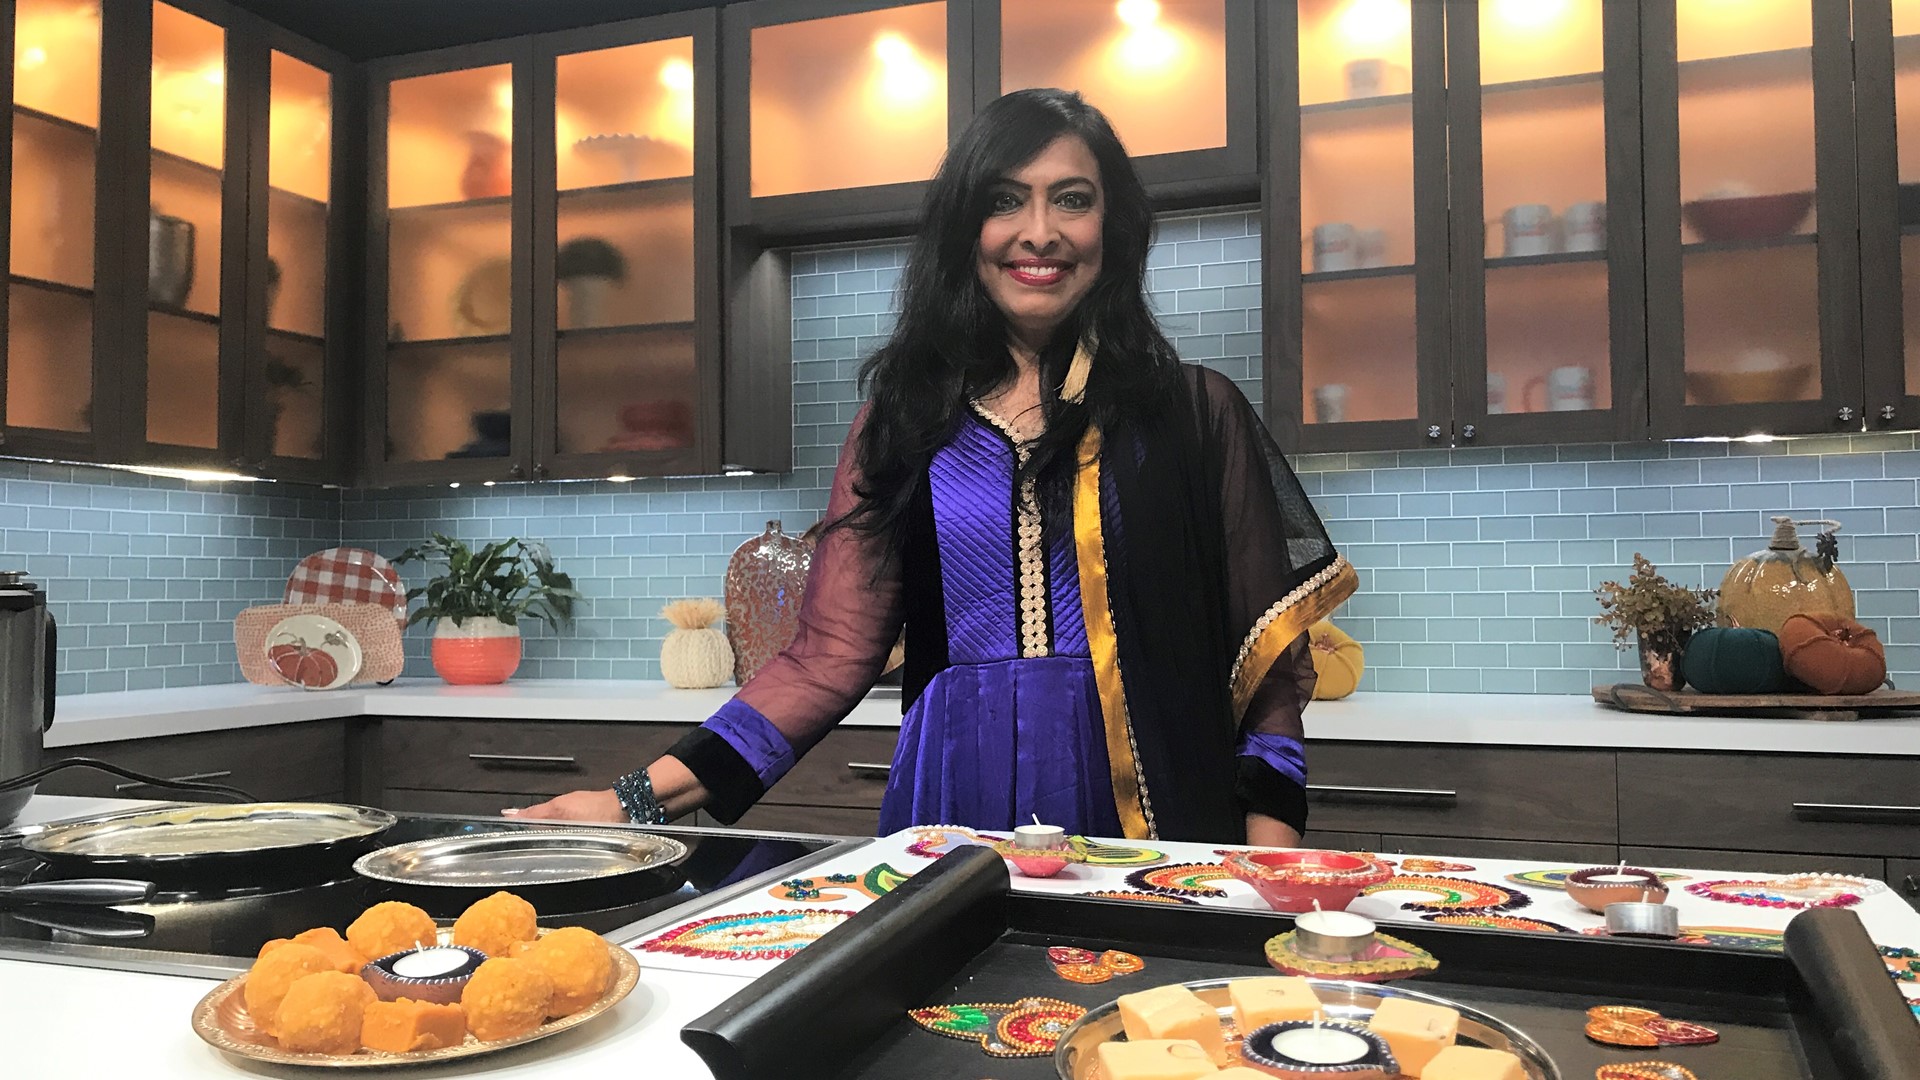 Whole Foods Market celebrates Diwali with Indian Cuisine - Tasty